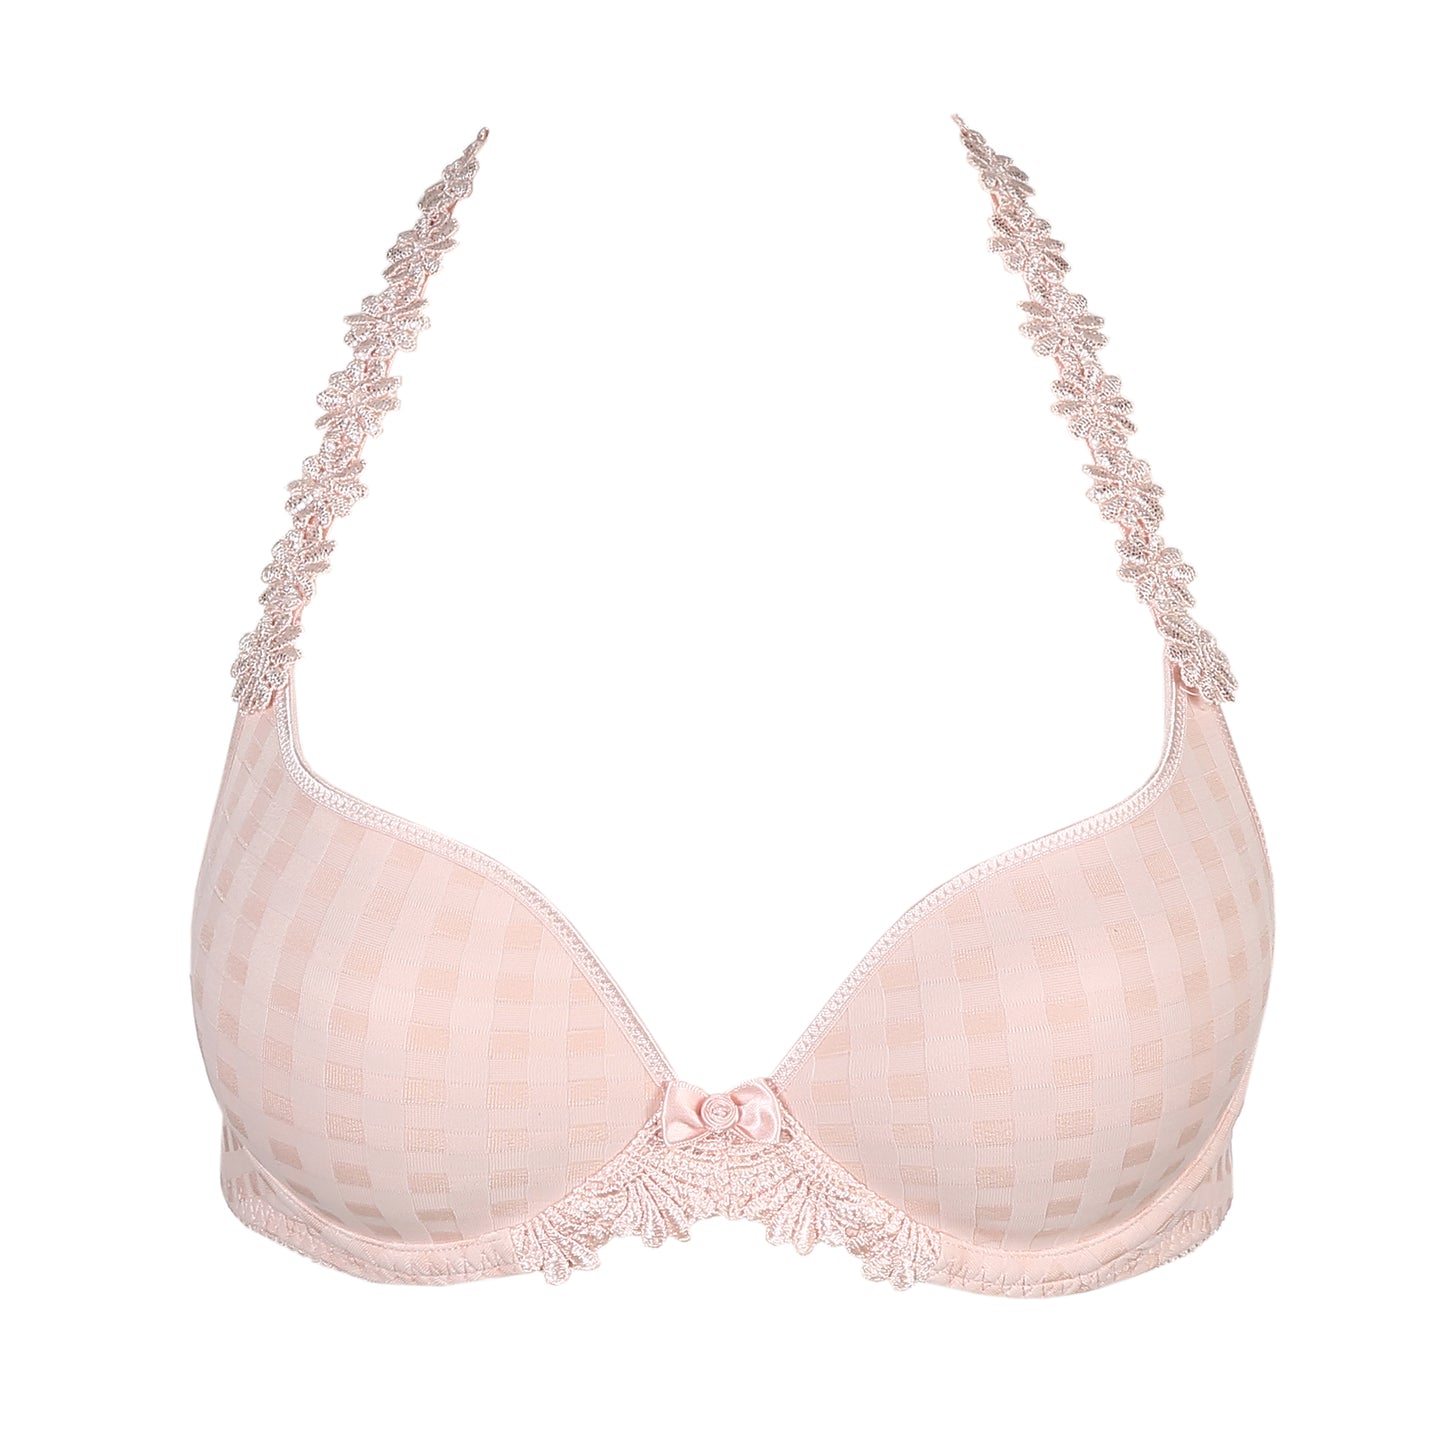 Marie Jo Avero voorgevormde bh - hartvorm pearly pink